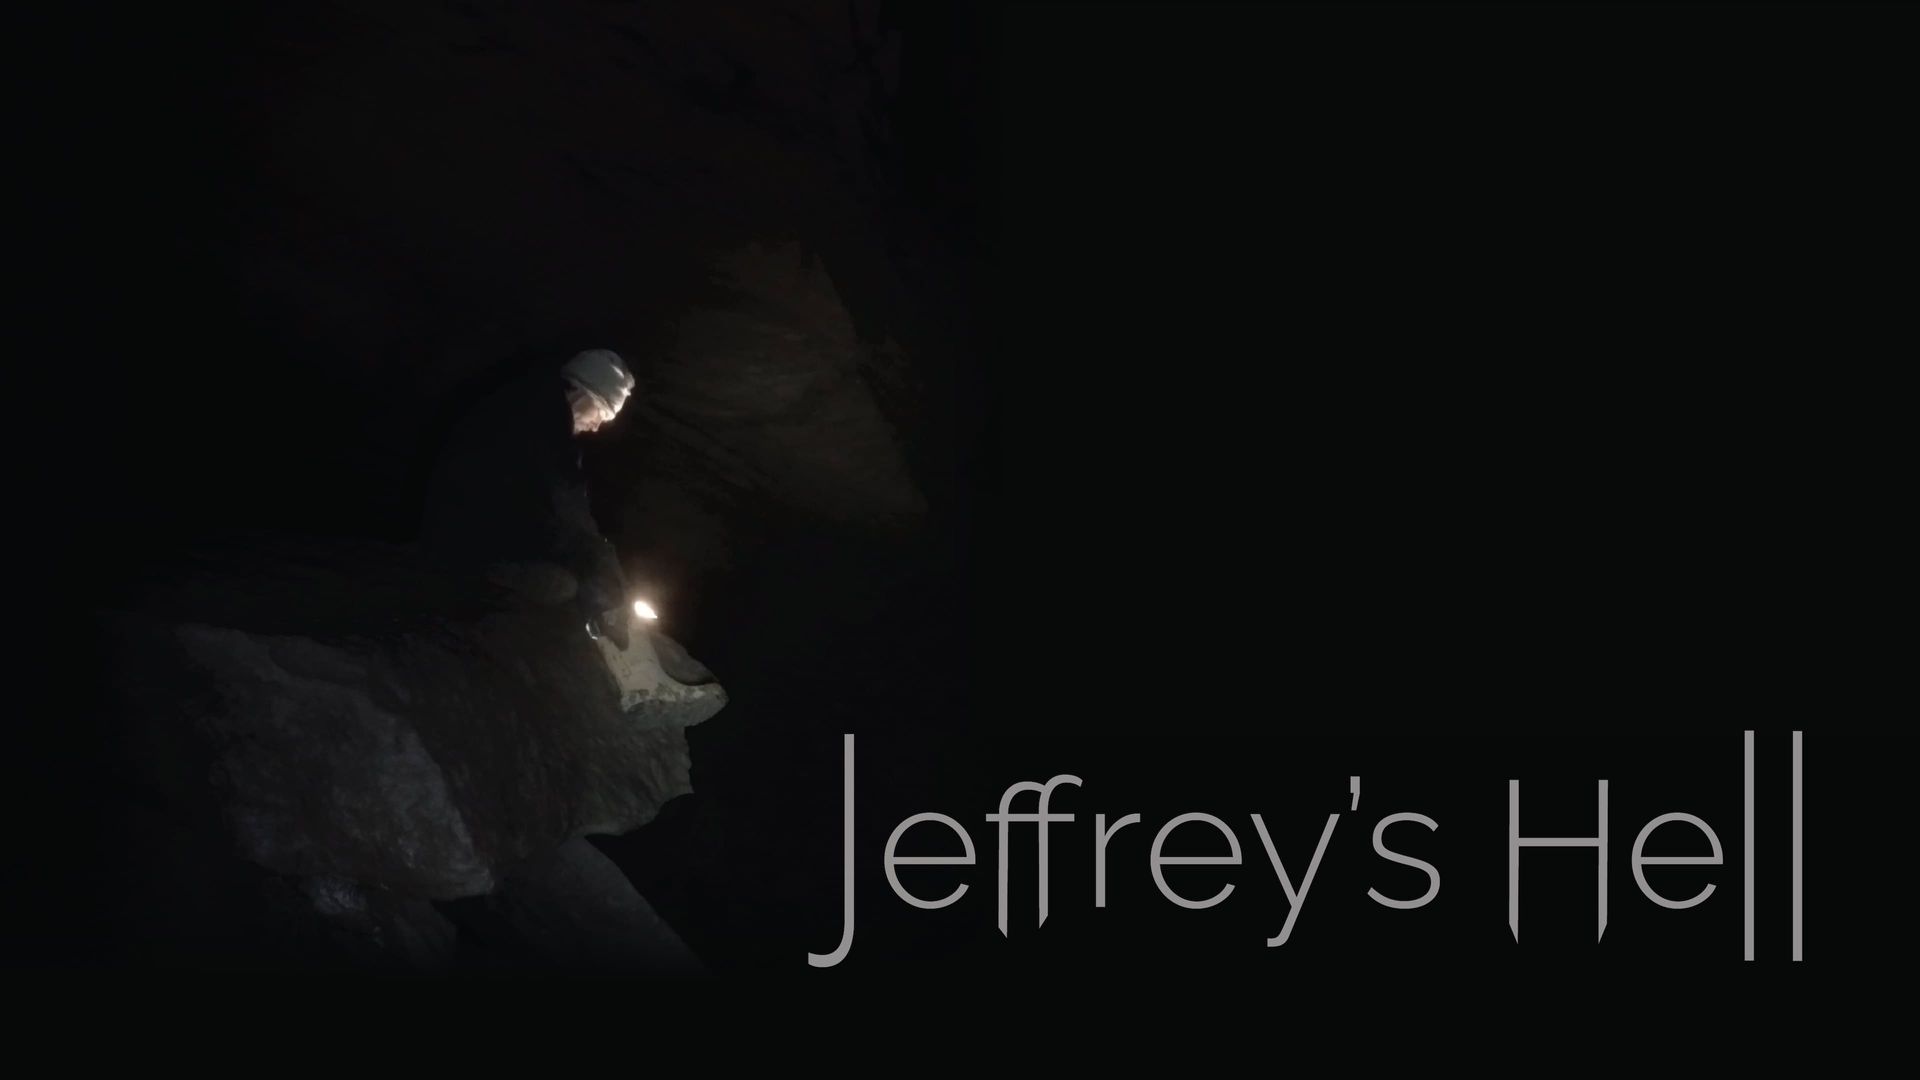 Jeffrey's Hell background